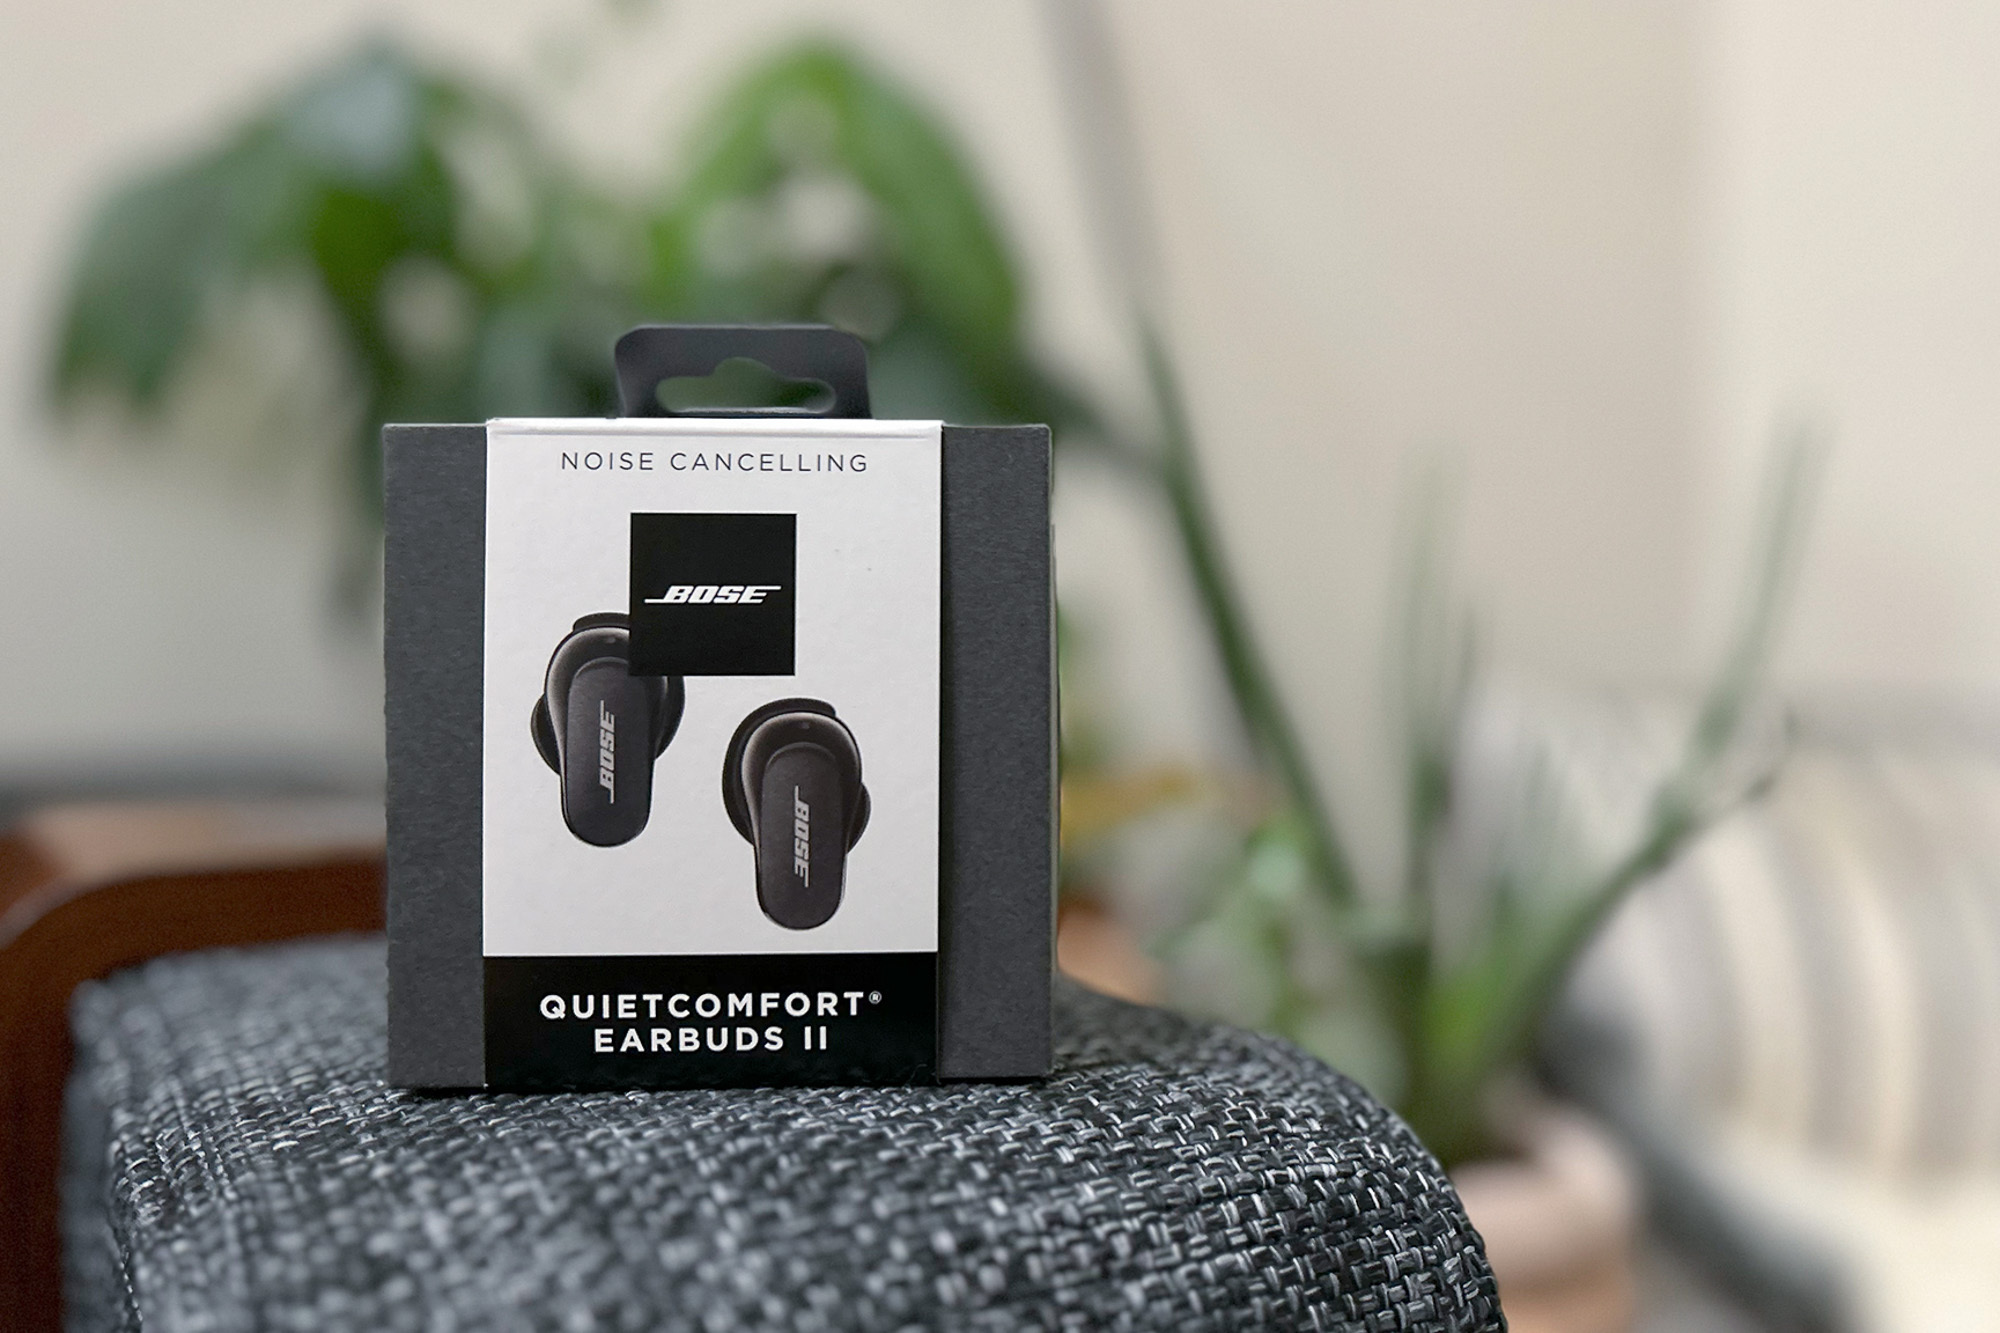 QuietComfort Earbuds II – Noise Cancelling Earbuds